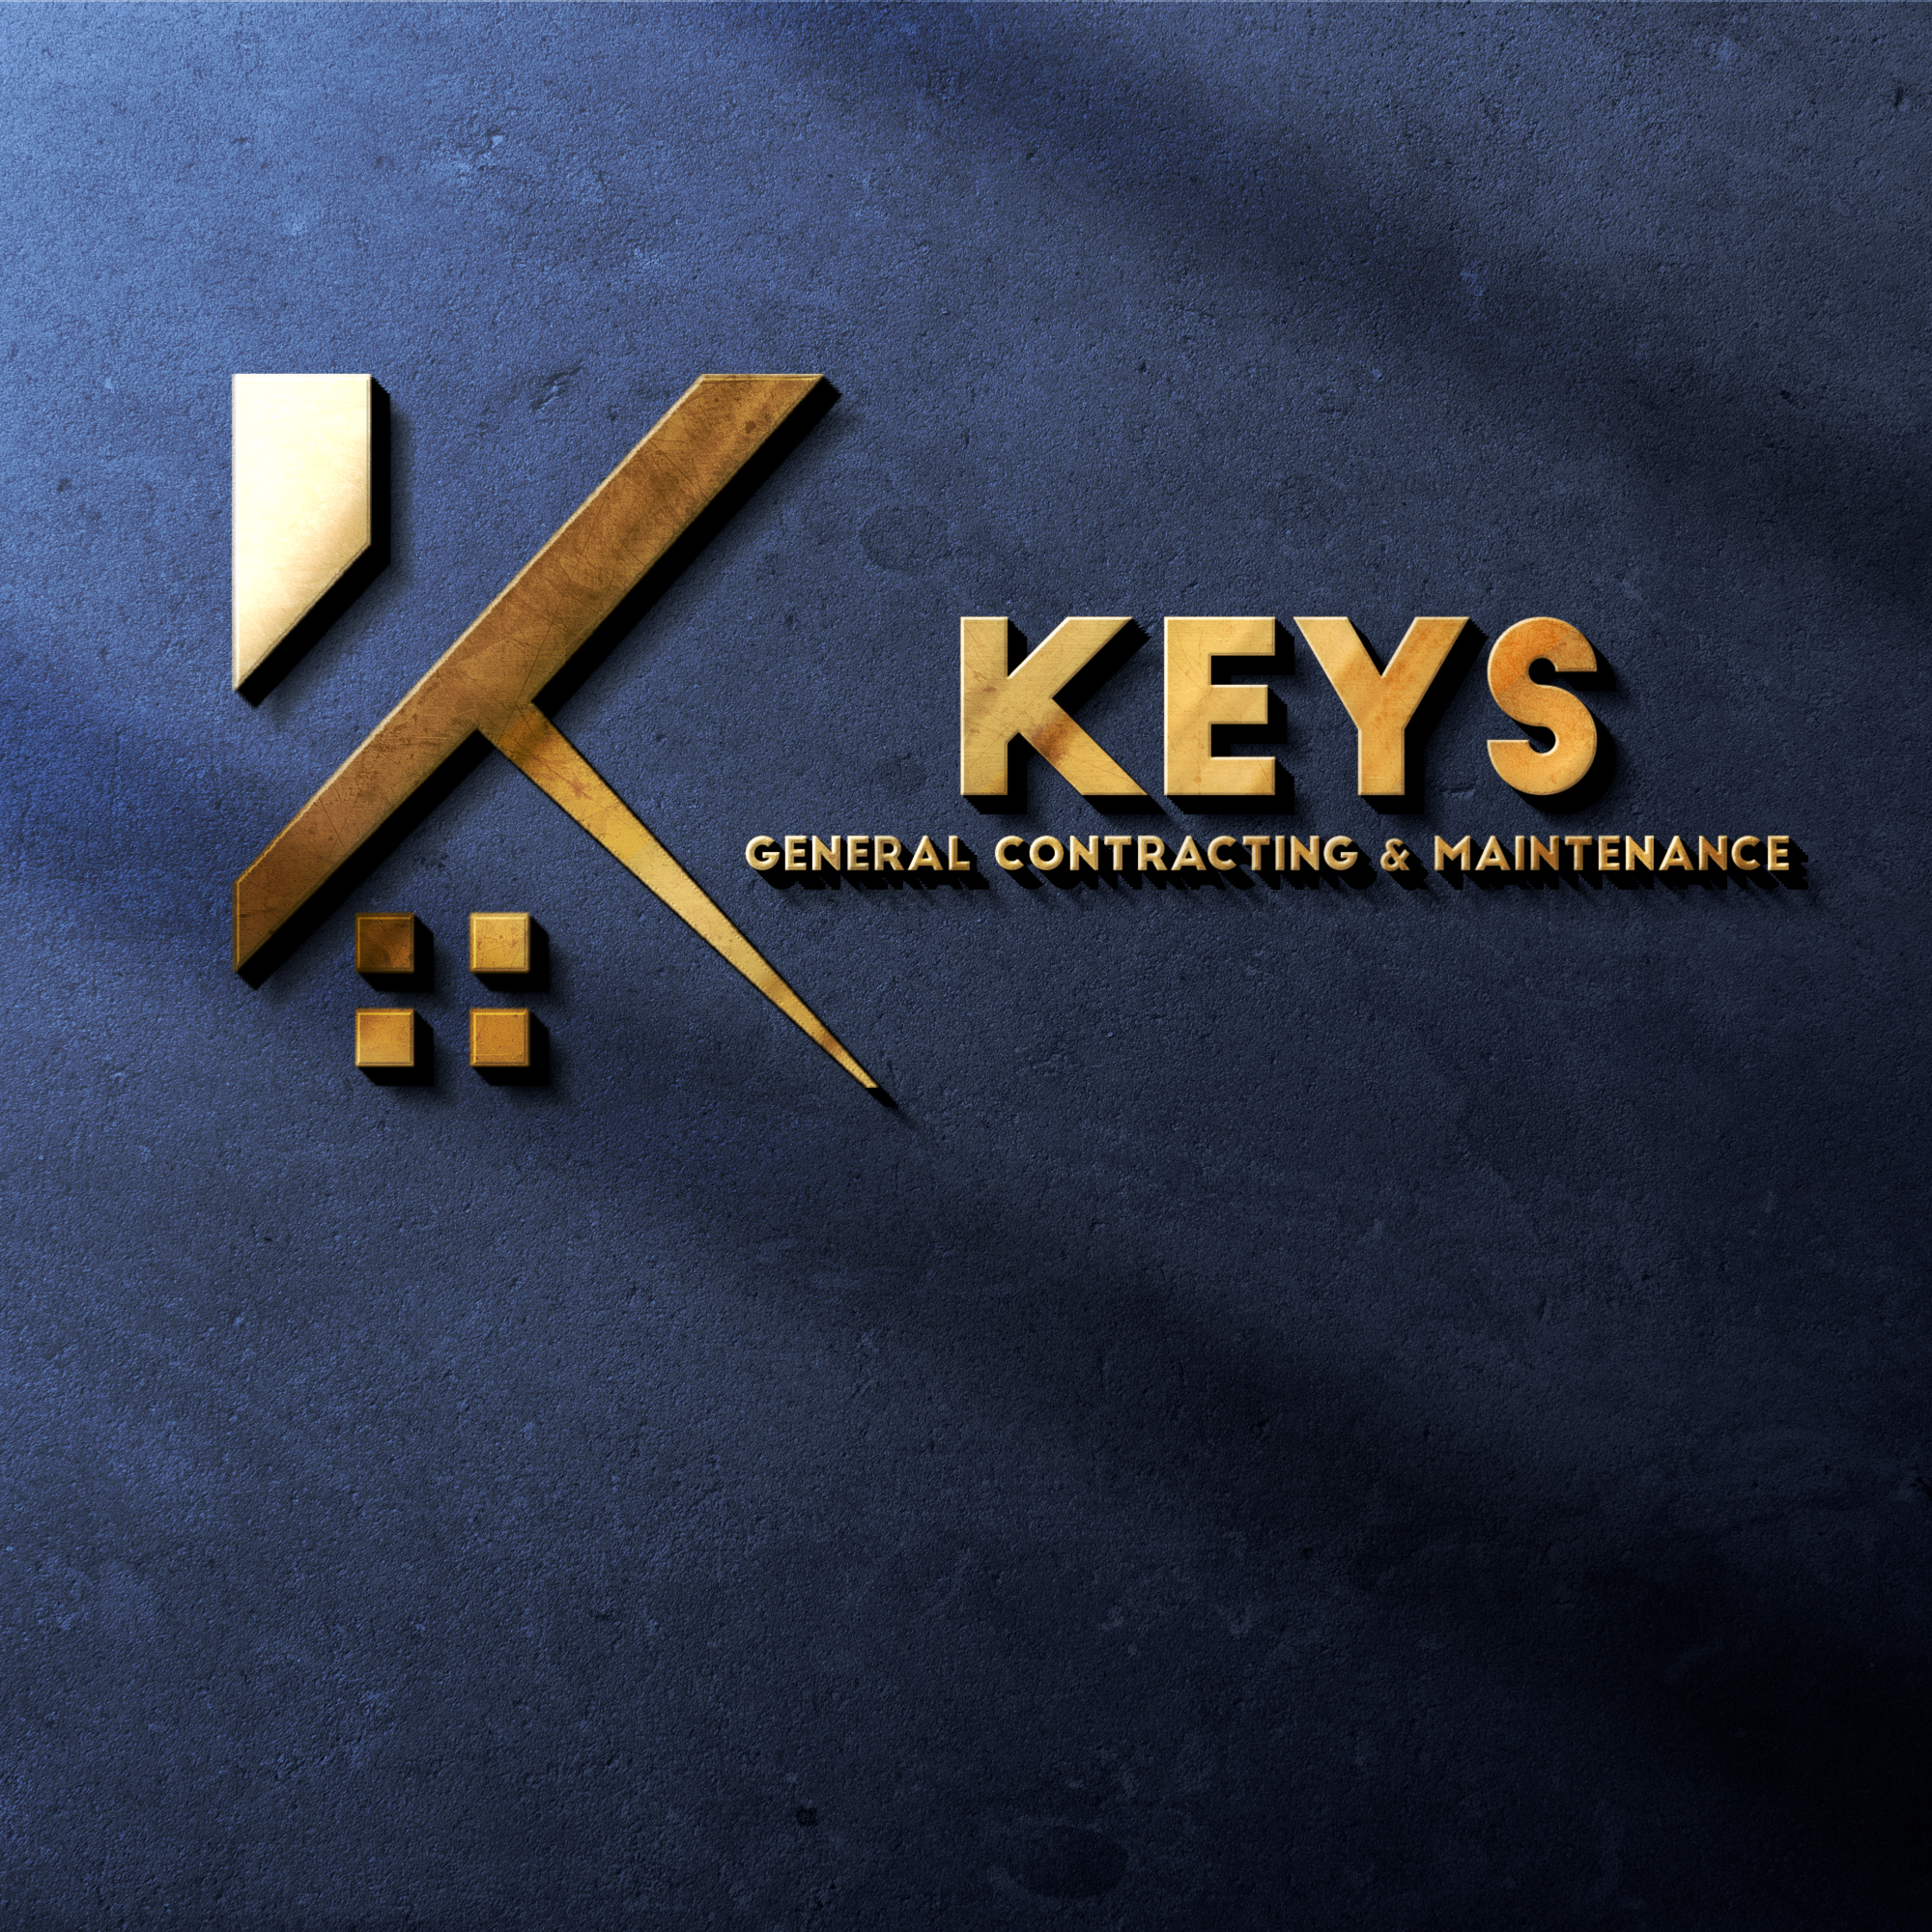 Keys General Contracting & Maintenance